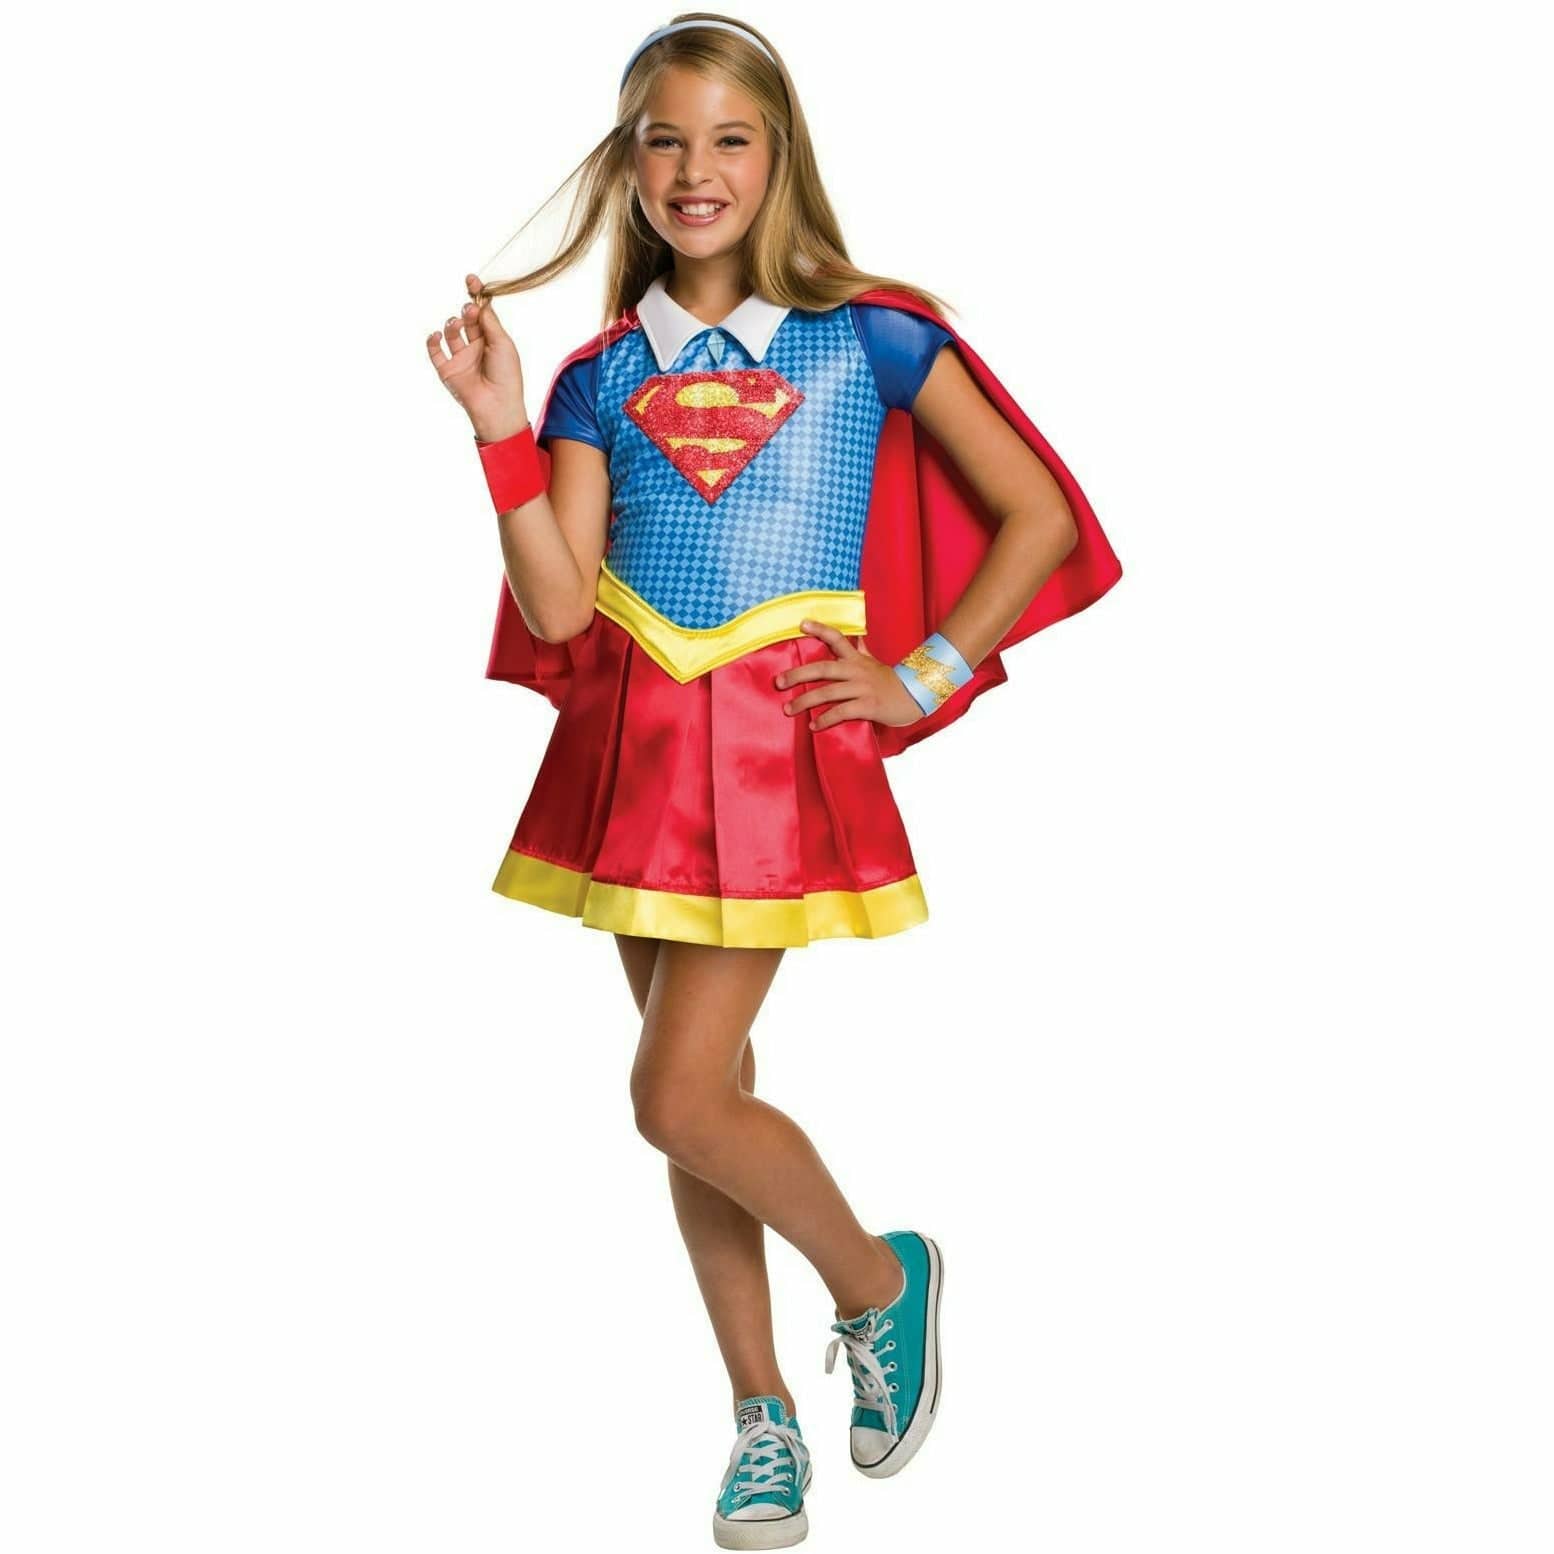 Rubies COSTUMES Small (4-6) Girls DC Super Hero Deluxe Supergirl Child Costume